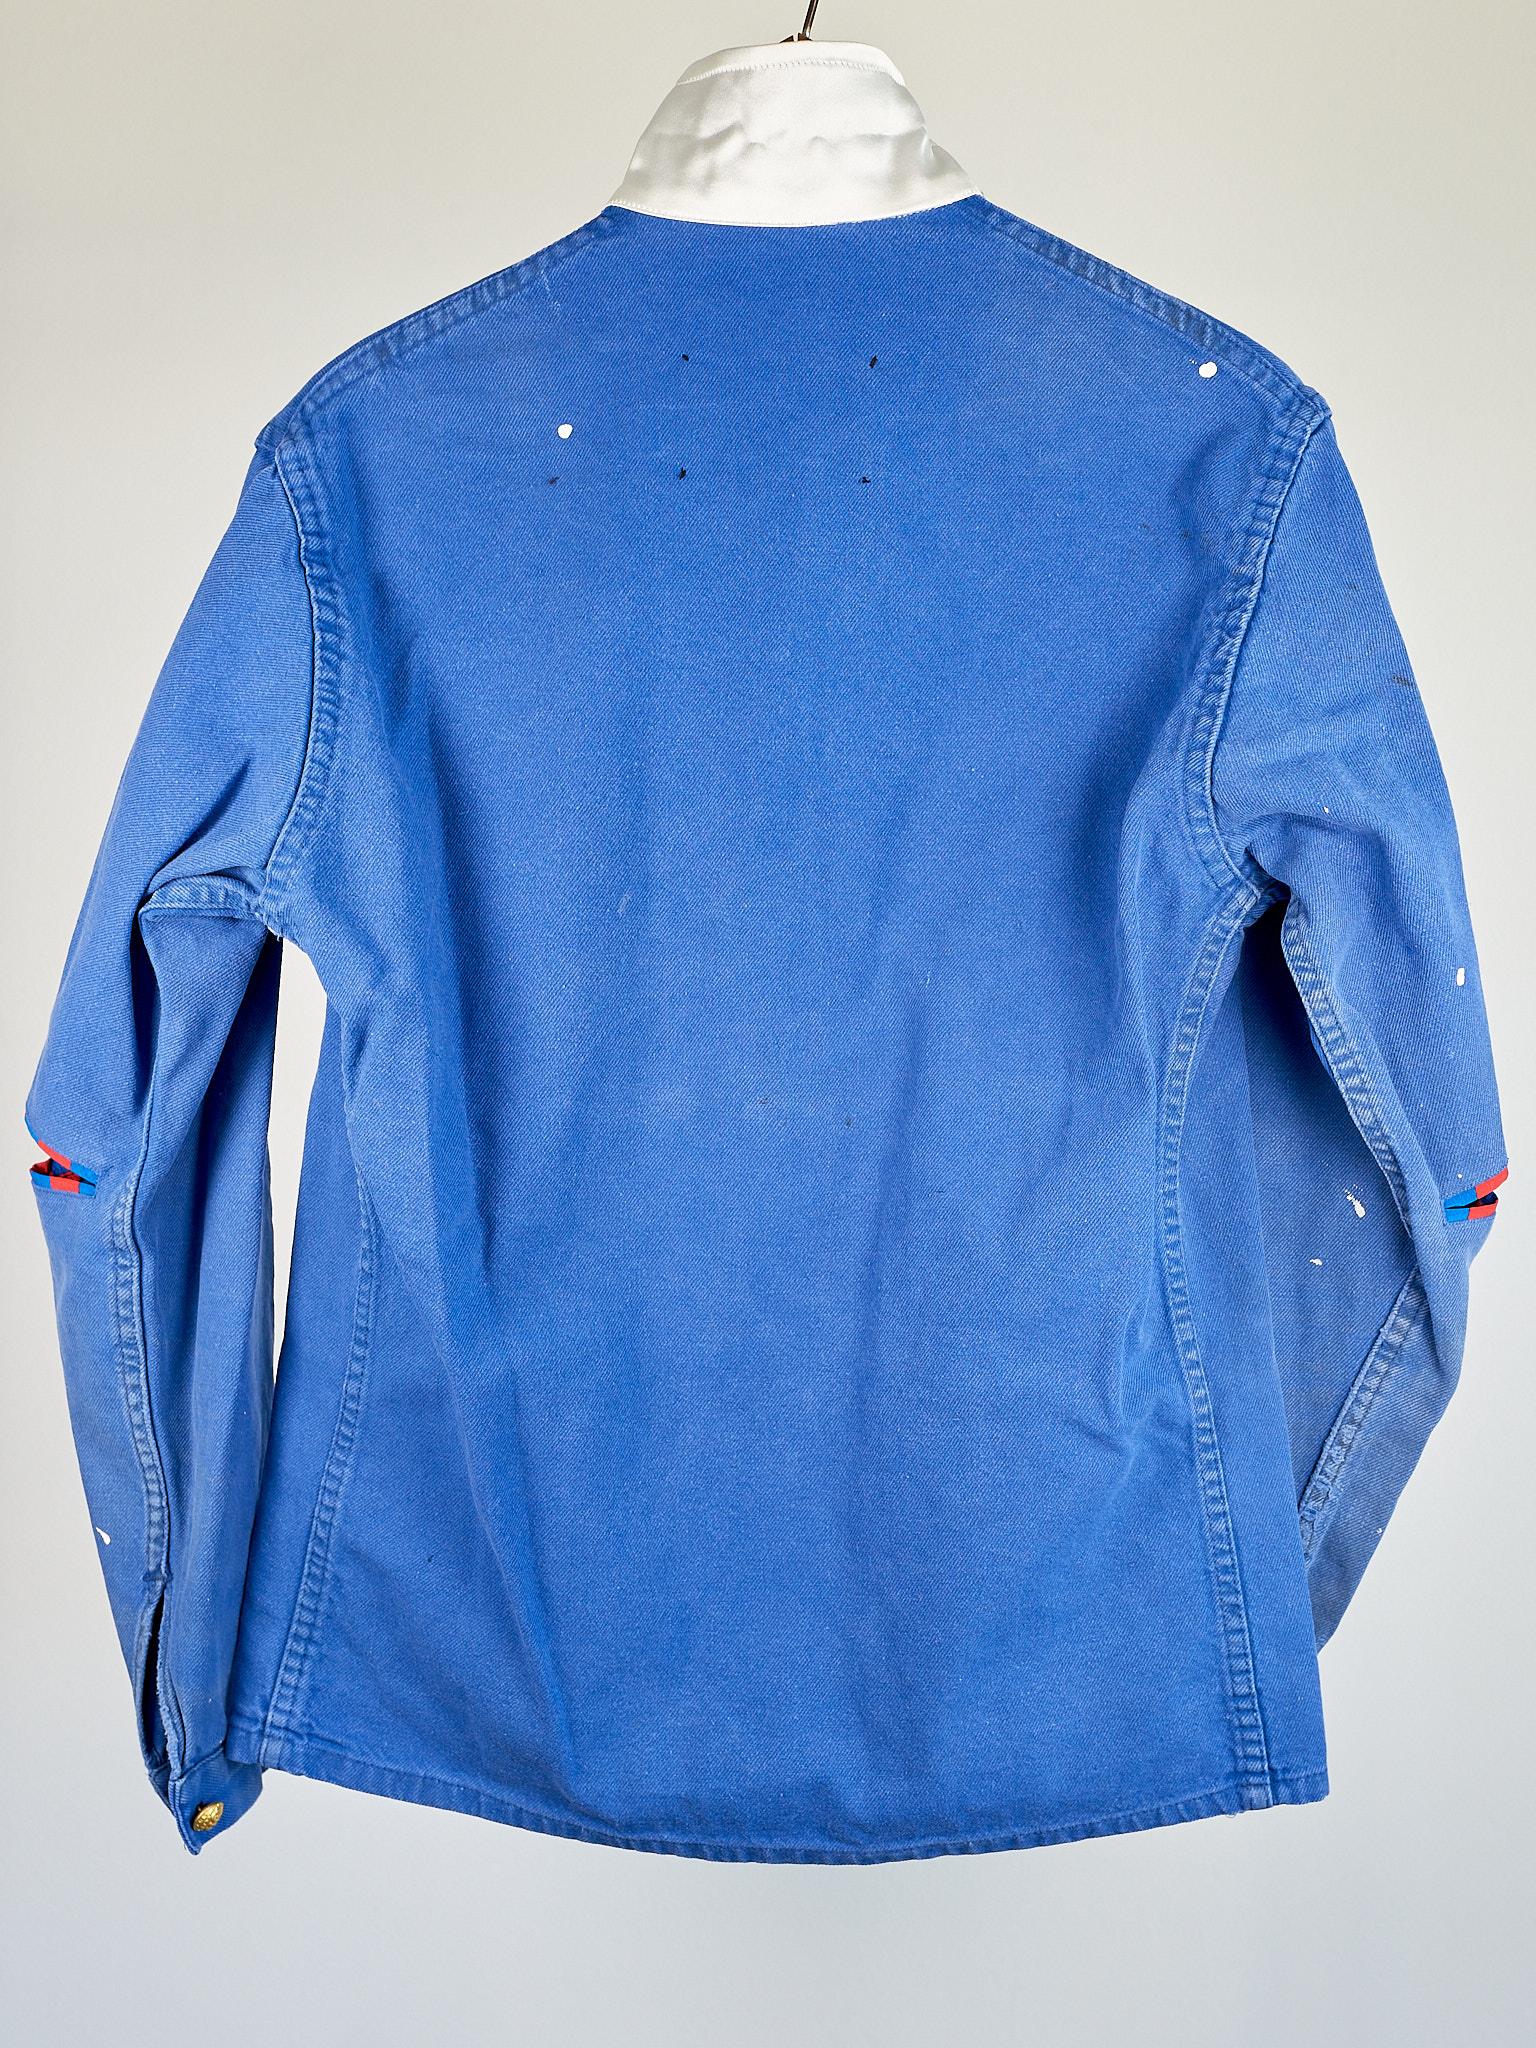 French Jacket Distressed Cobalt Blue Silver Bullion Fringes Red Blue White Silk 4